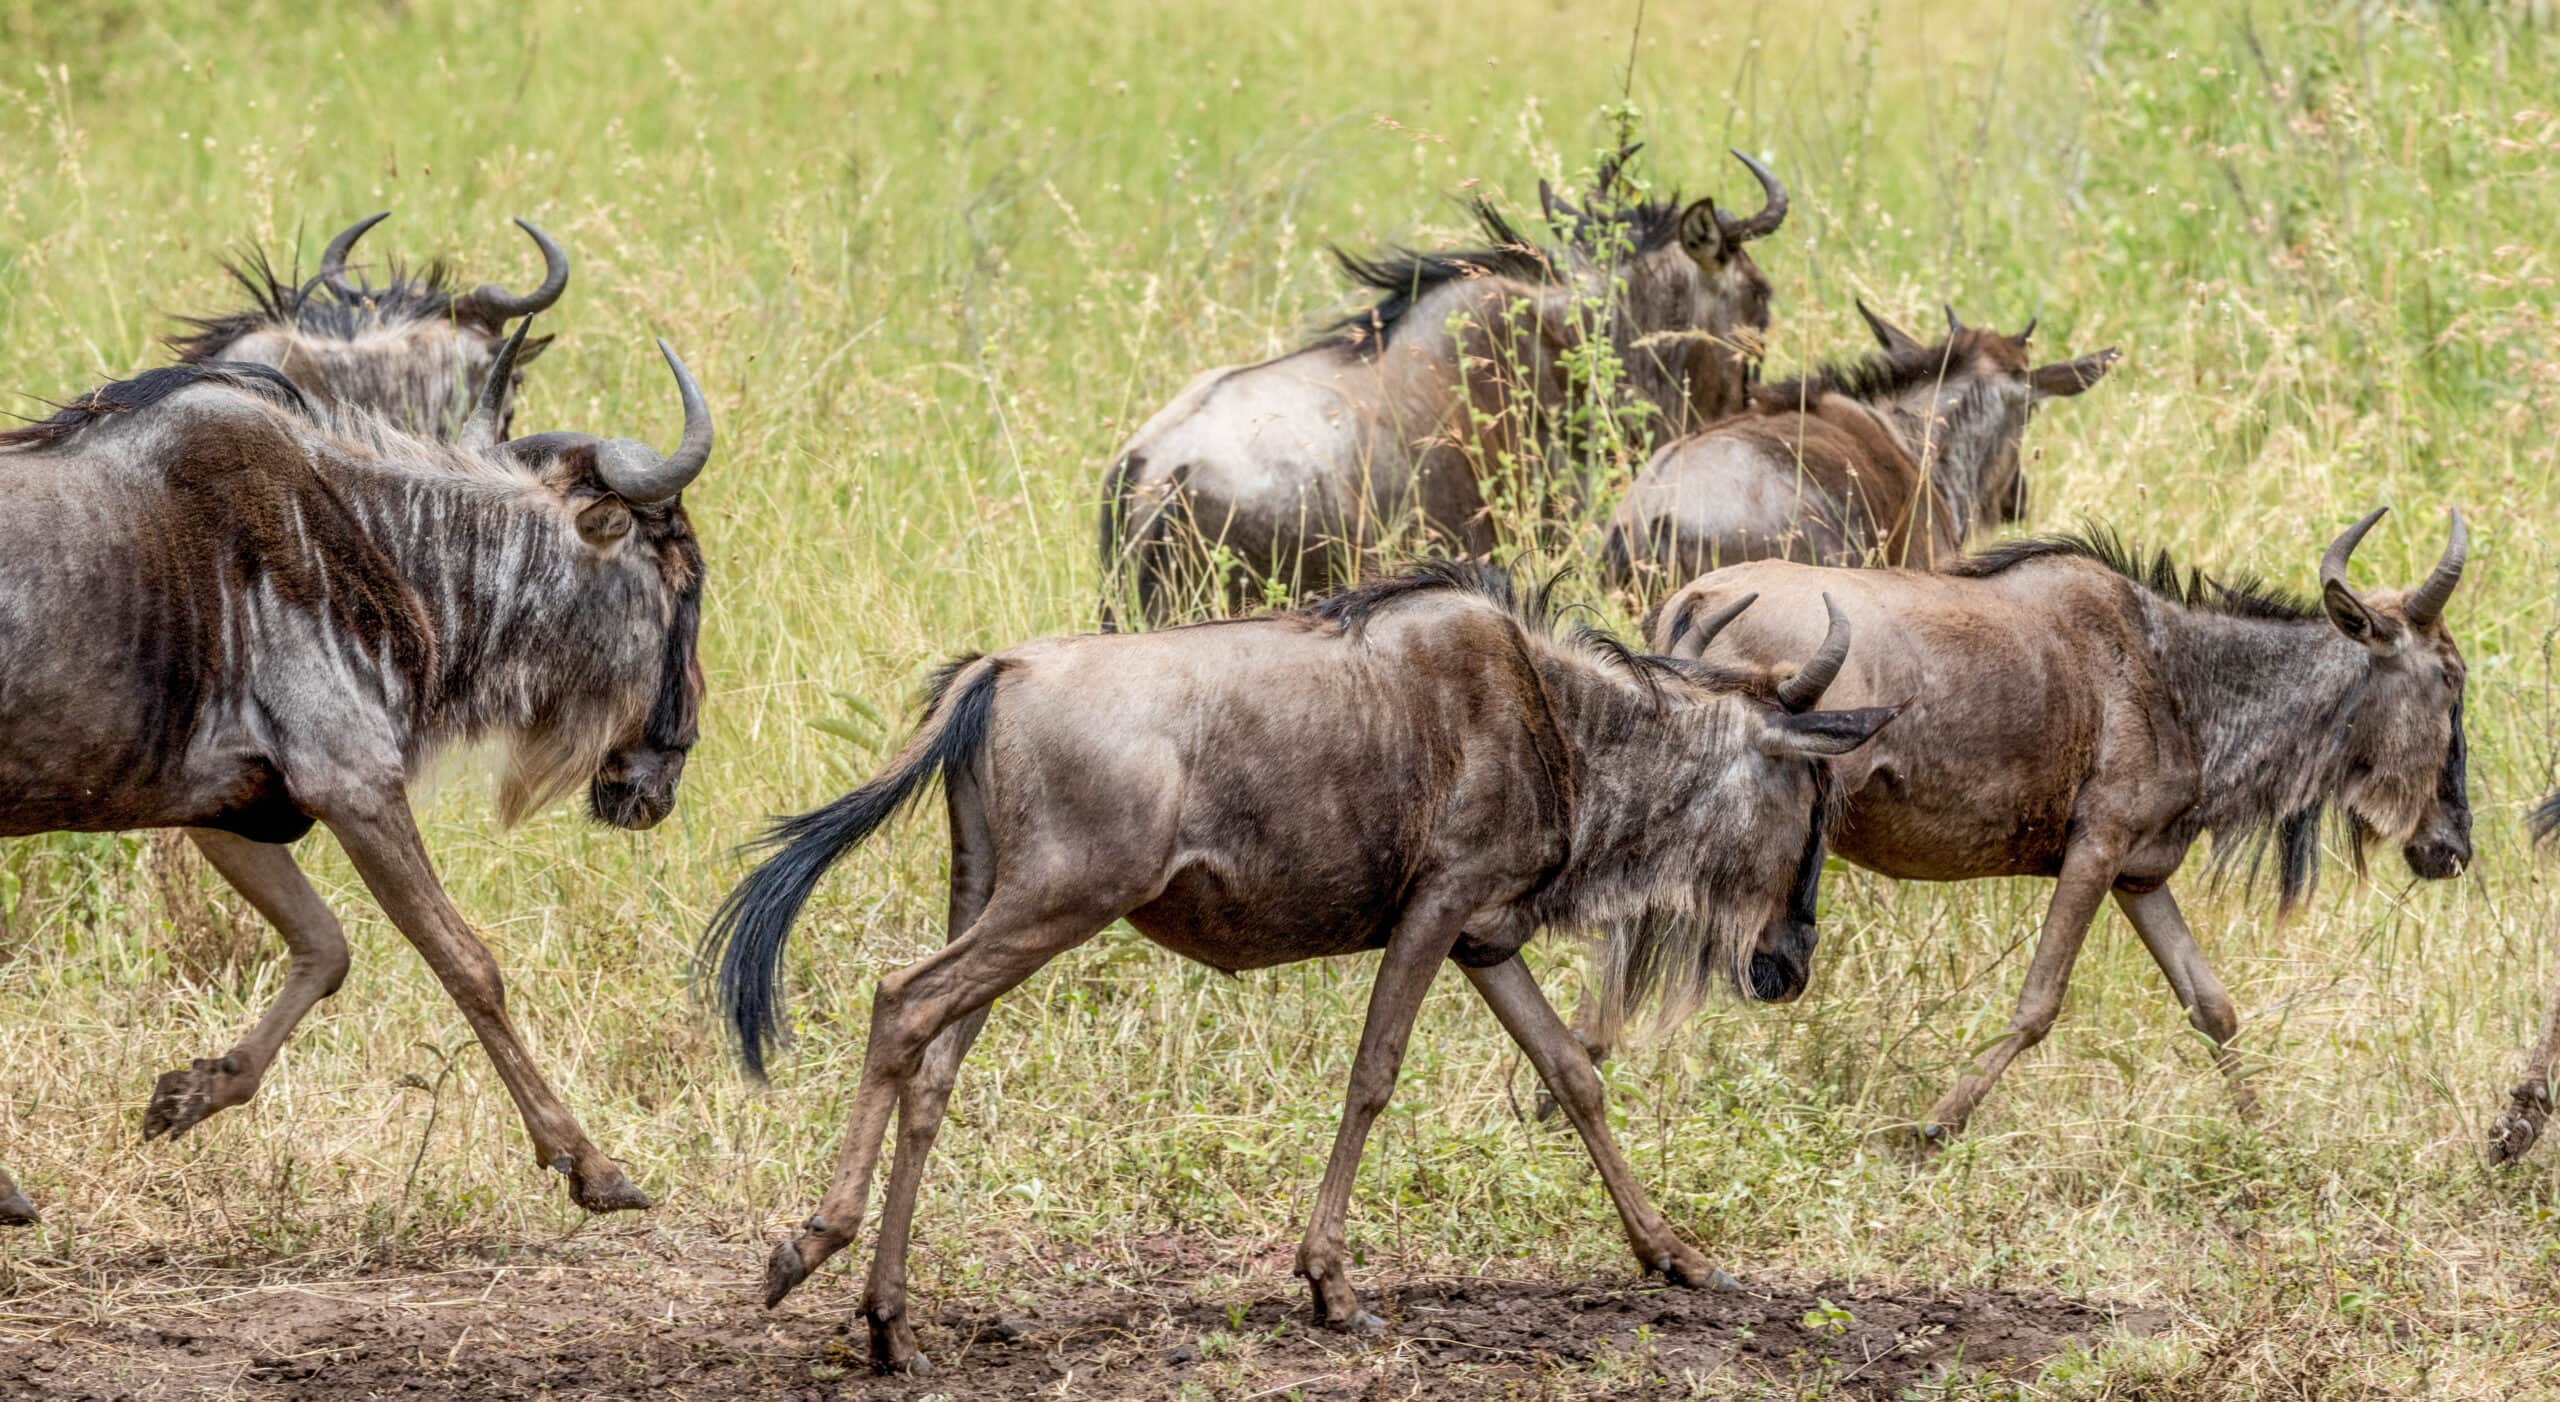 wildebeest migration between kenya and tanzania 2022 09 08 14 49 06 utc scaled